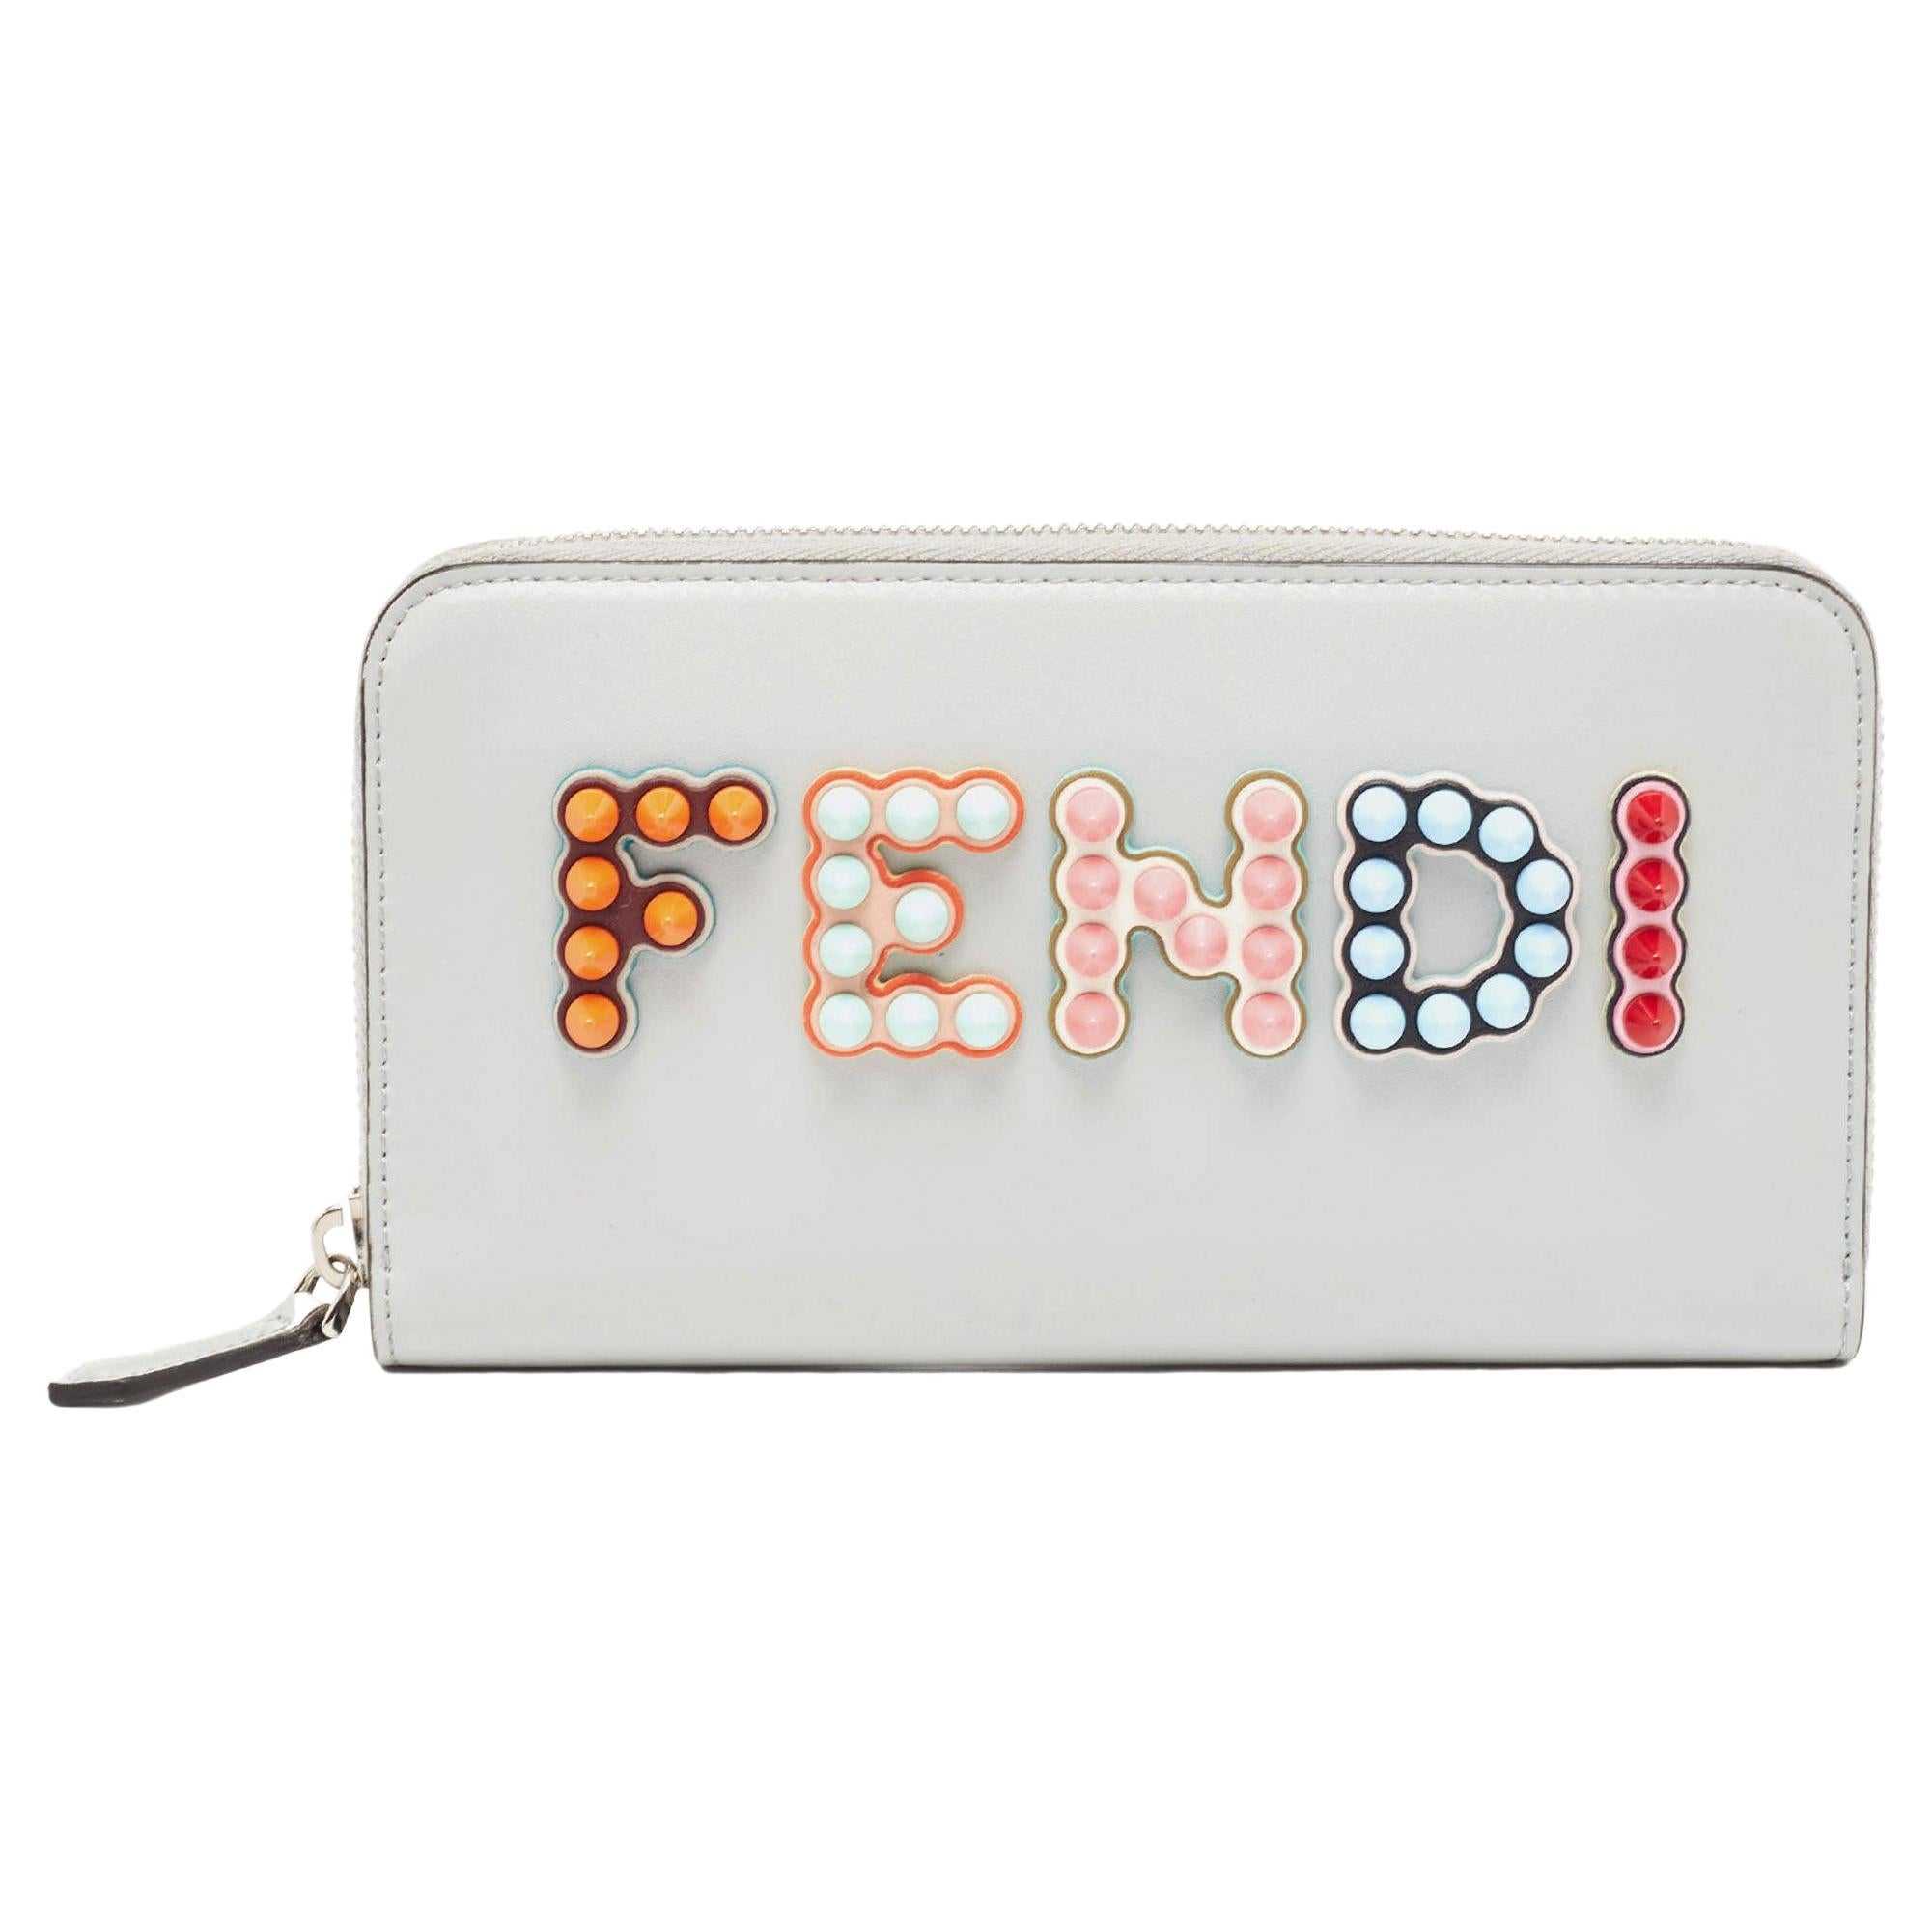 How do I authenticate a Fendi wallet?